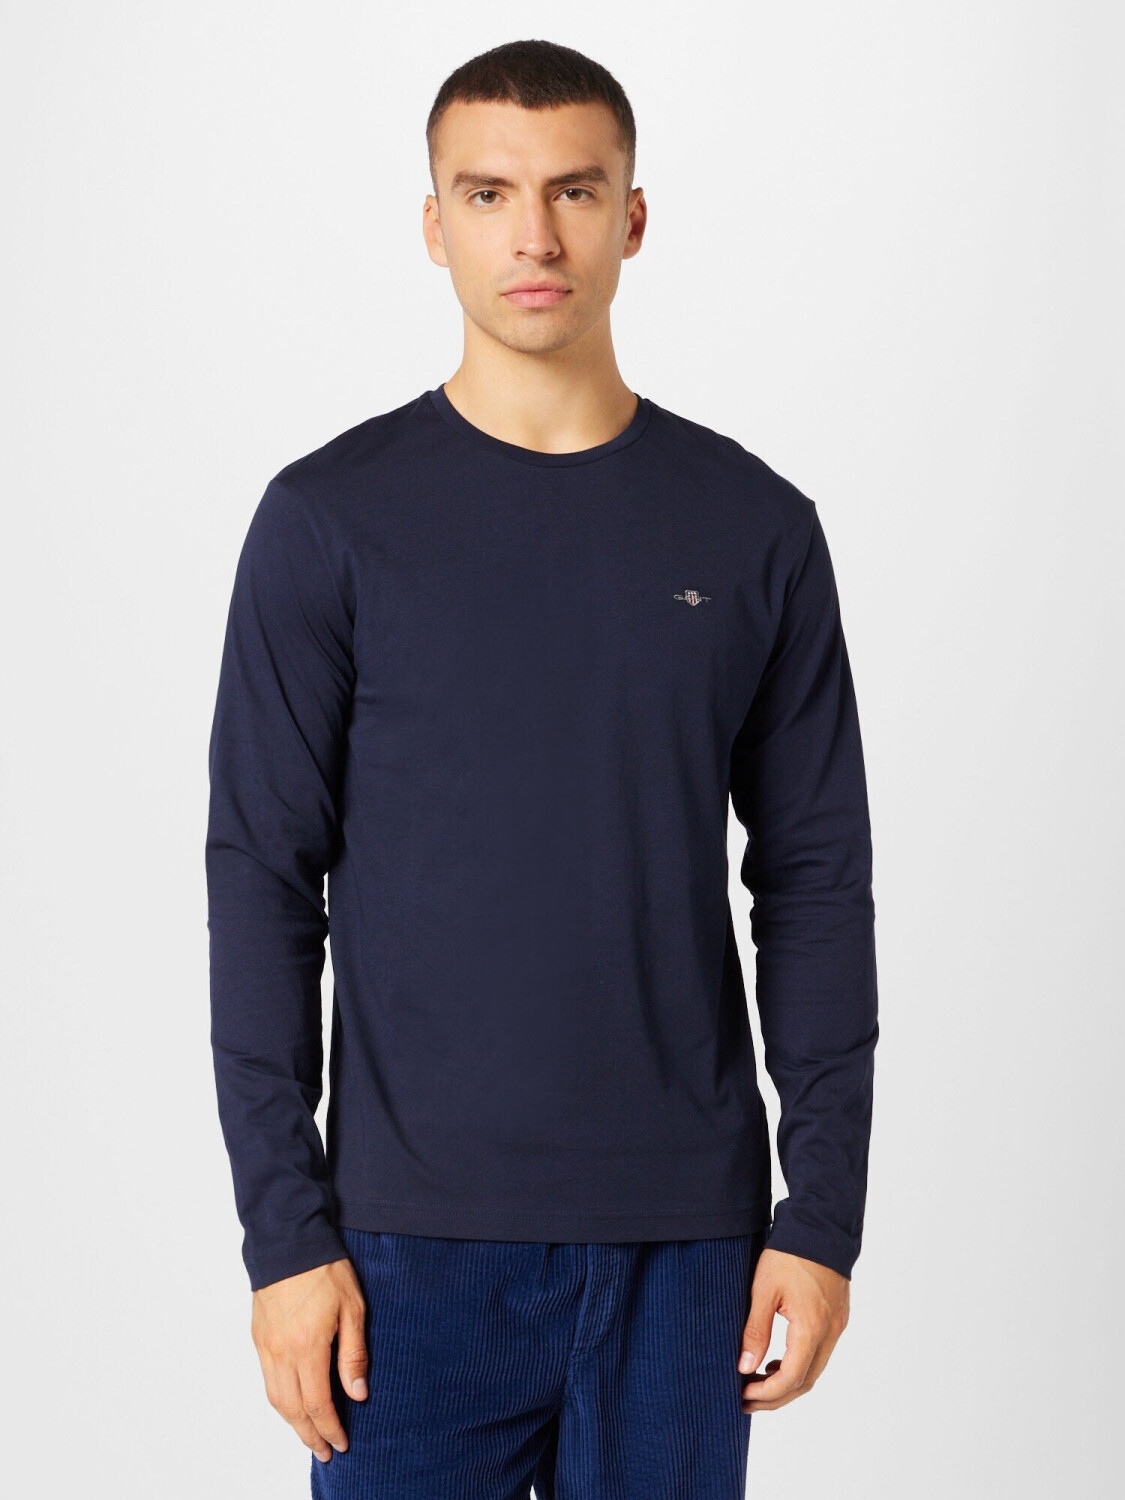 GANT Shield Langarm-T-Shirt (2004049) evening blue ab 38,99 € |  Preisvergleich bei